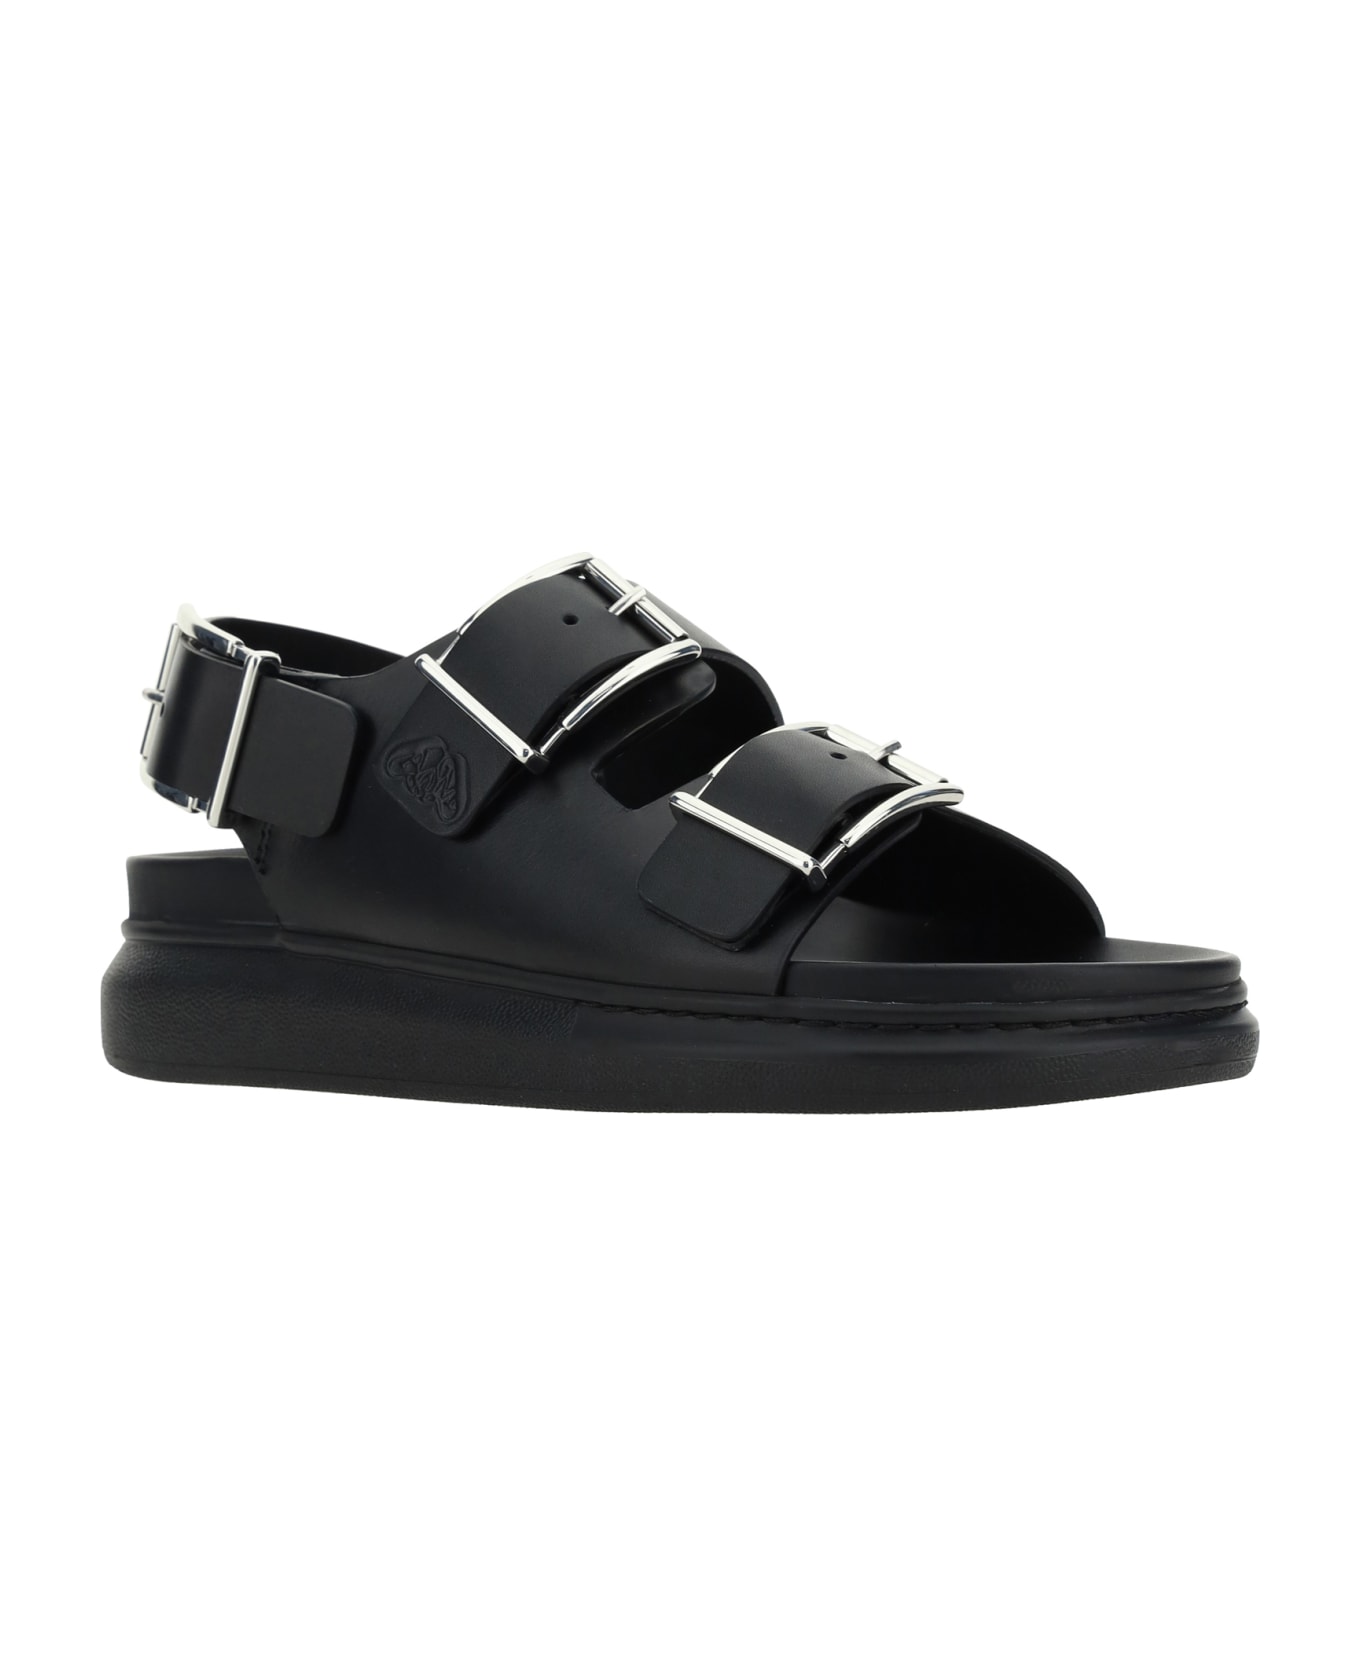 Alexander McQueen Sandals - Black/silver